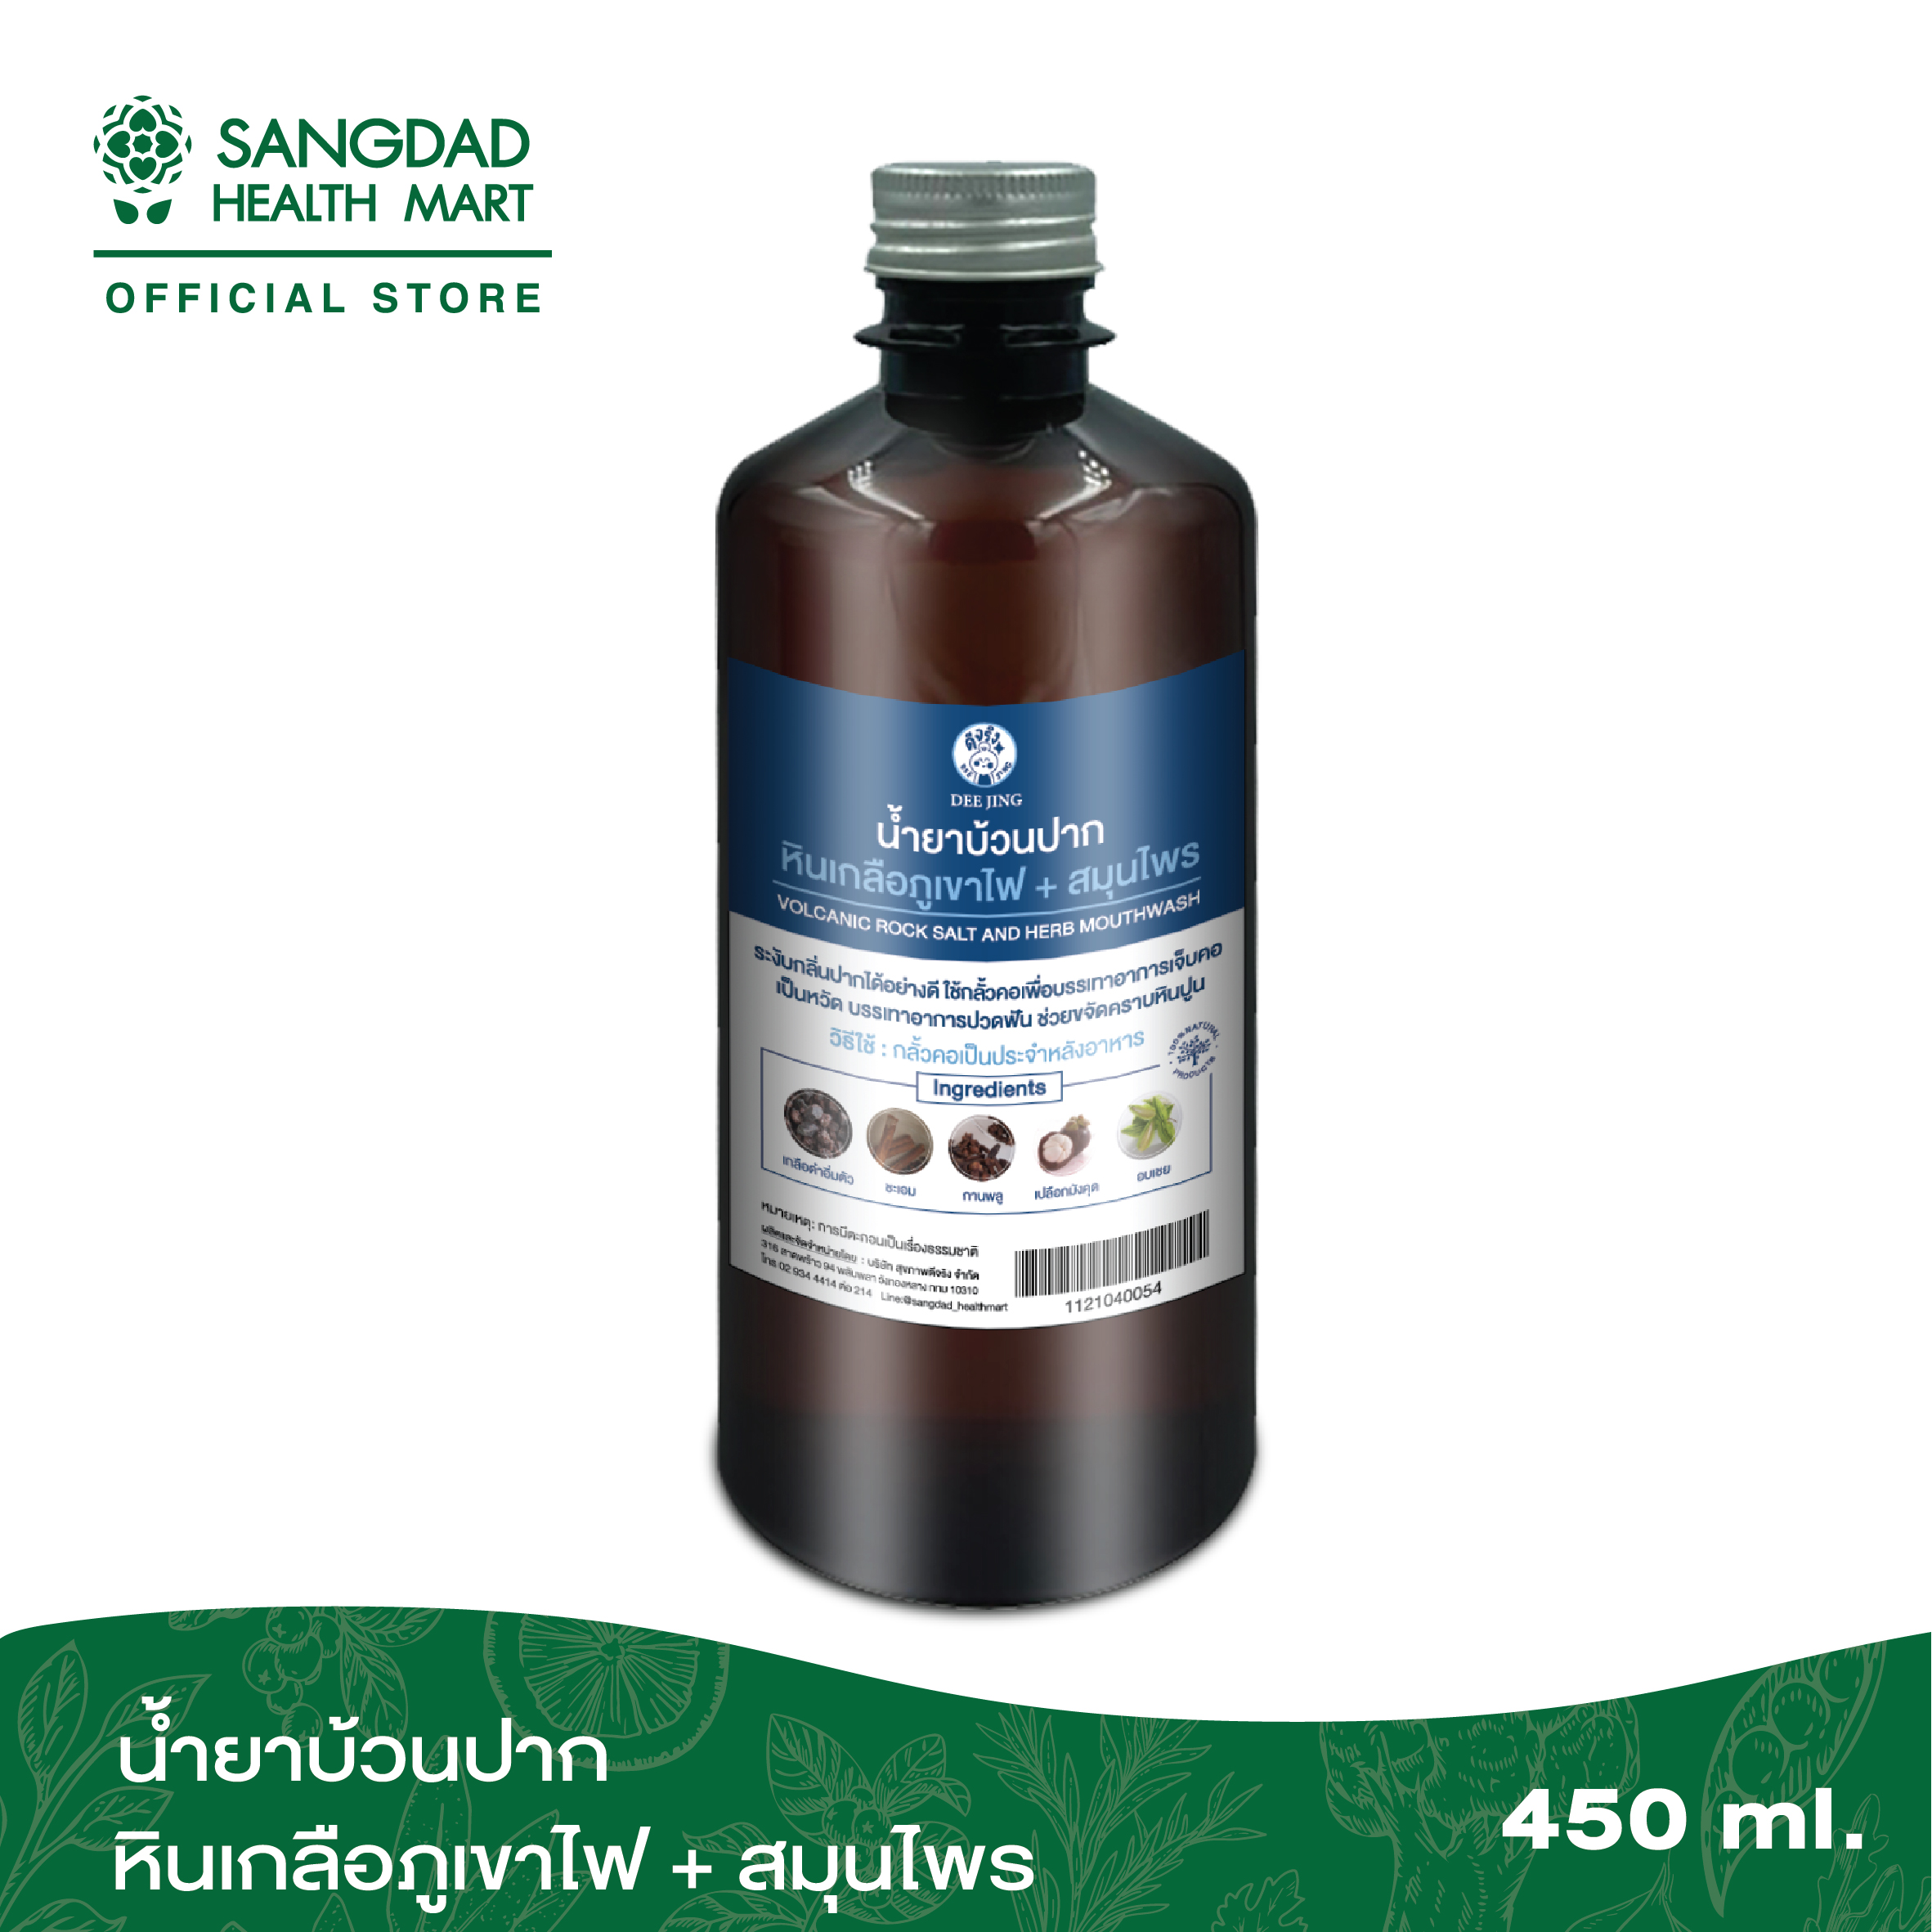 Sangdad Health Mart : น้ำยาบ้วนปาก หินเกลือดำผสมสมุนไพร By:ป้านิด|สินค้าดีจริง  #สุขภาพดีมีไว้แบ่งปัน